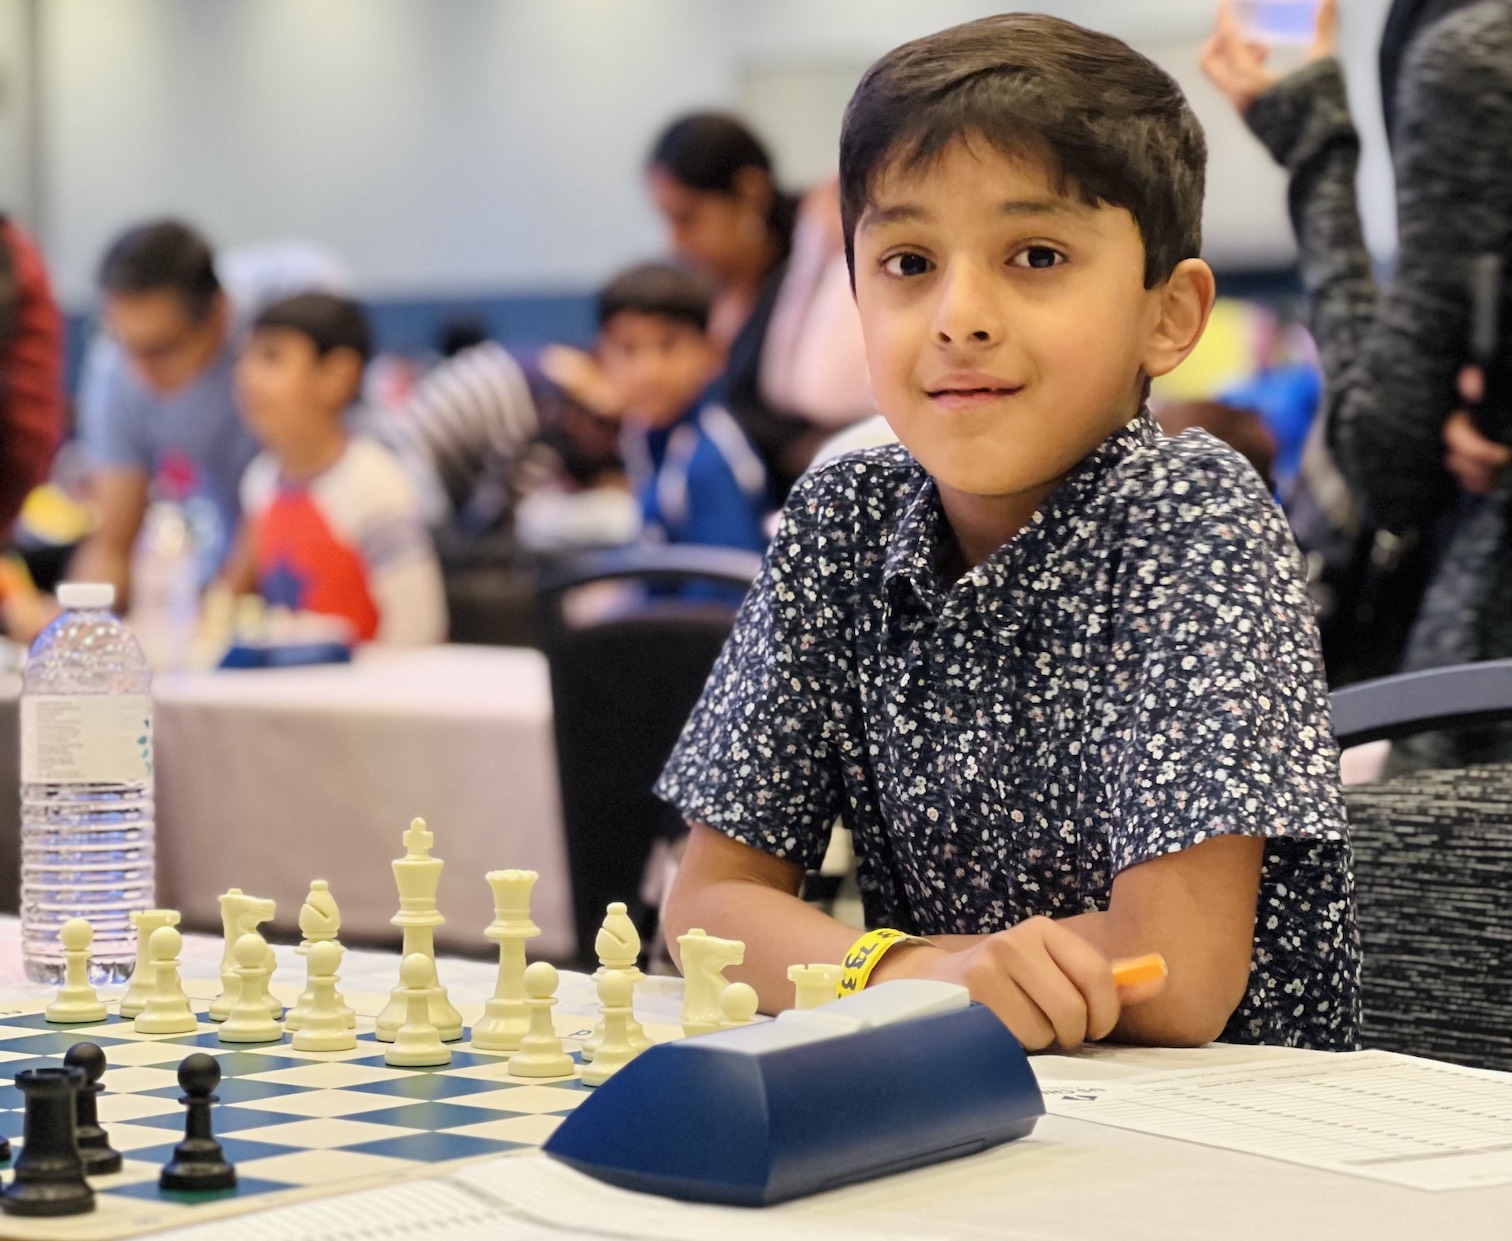 Hopkinton first grader wins national chess title